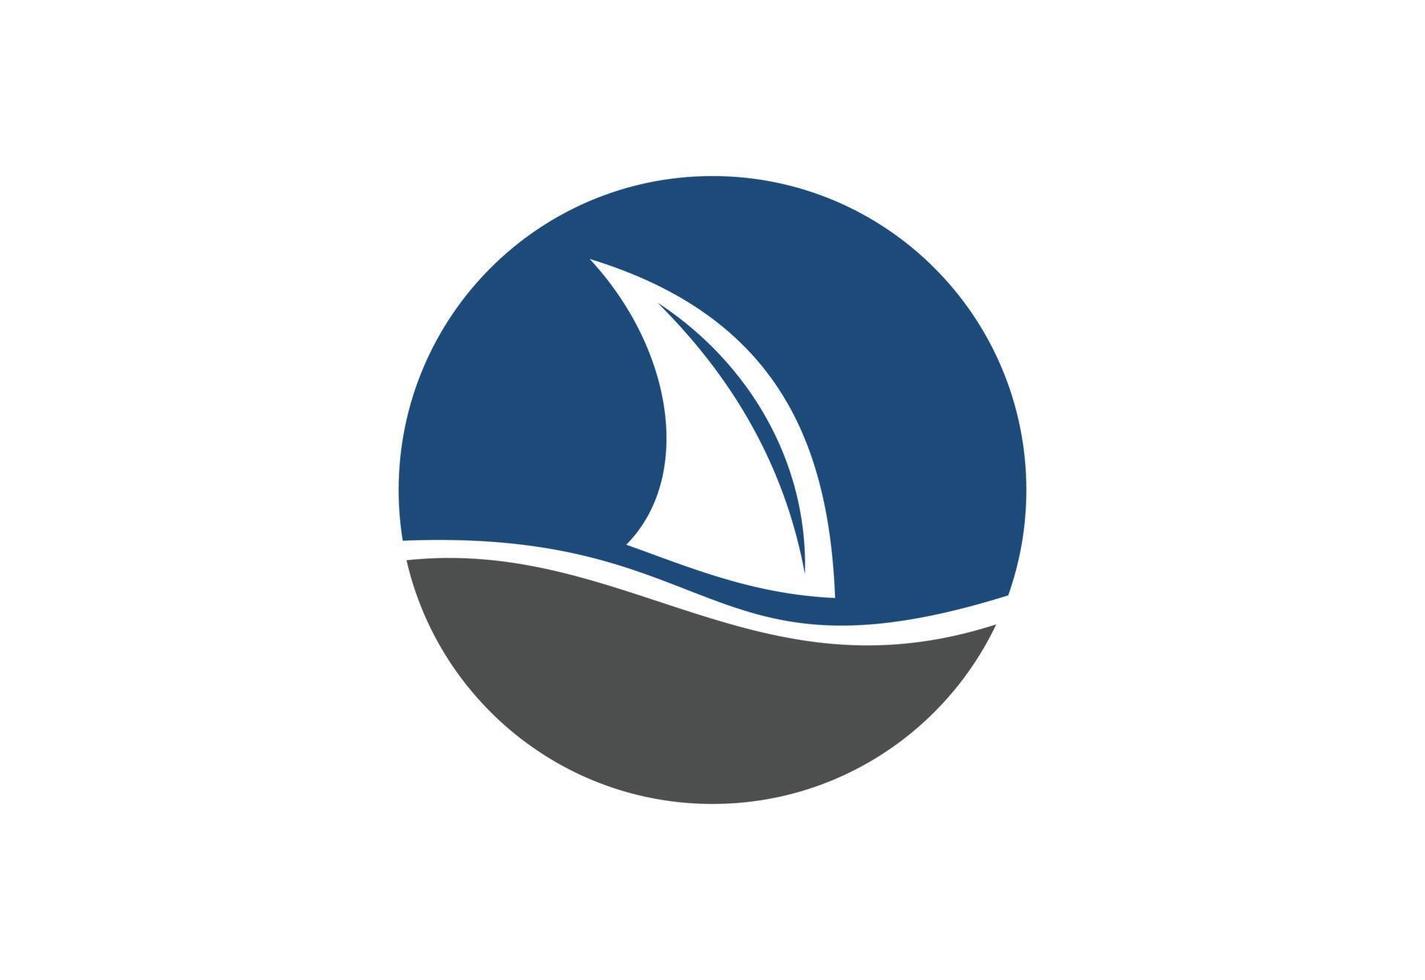 Stilisiertes Fischhai-Logo-Design, Vektorillustration vektor